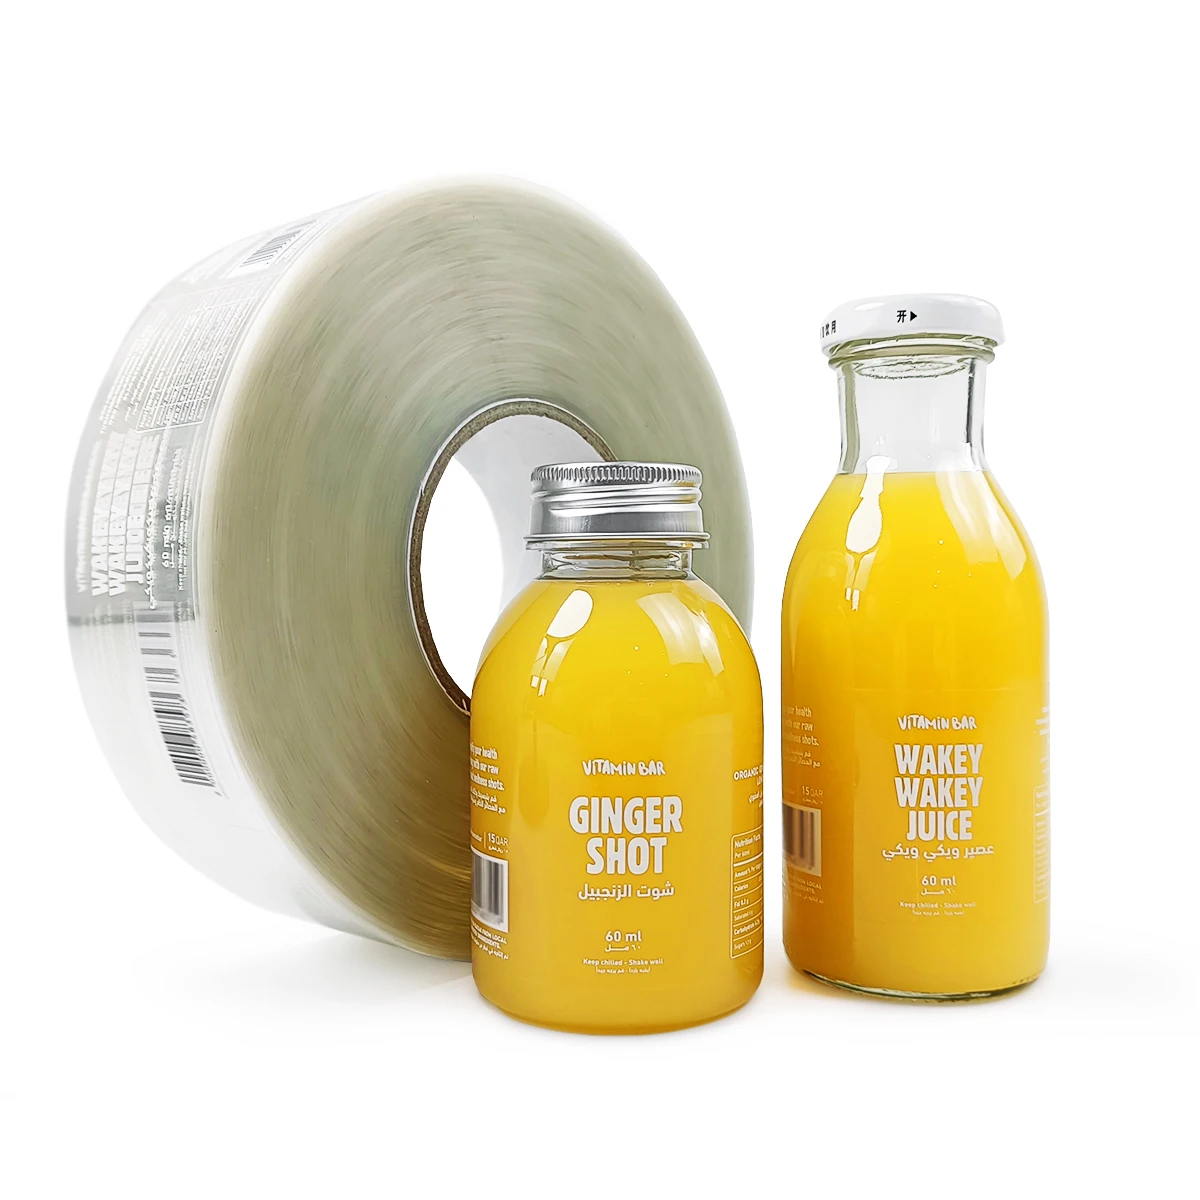 Custom Adhesive Eco-friendly Transparent White Vinyl LOGO Label,Bar Code Glass Fruit Juice Beverage Jar Bottle Label sticker